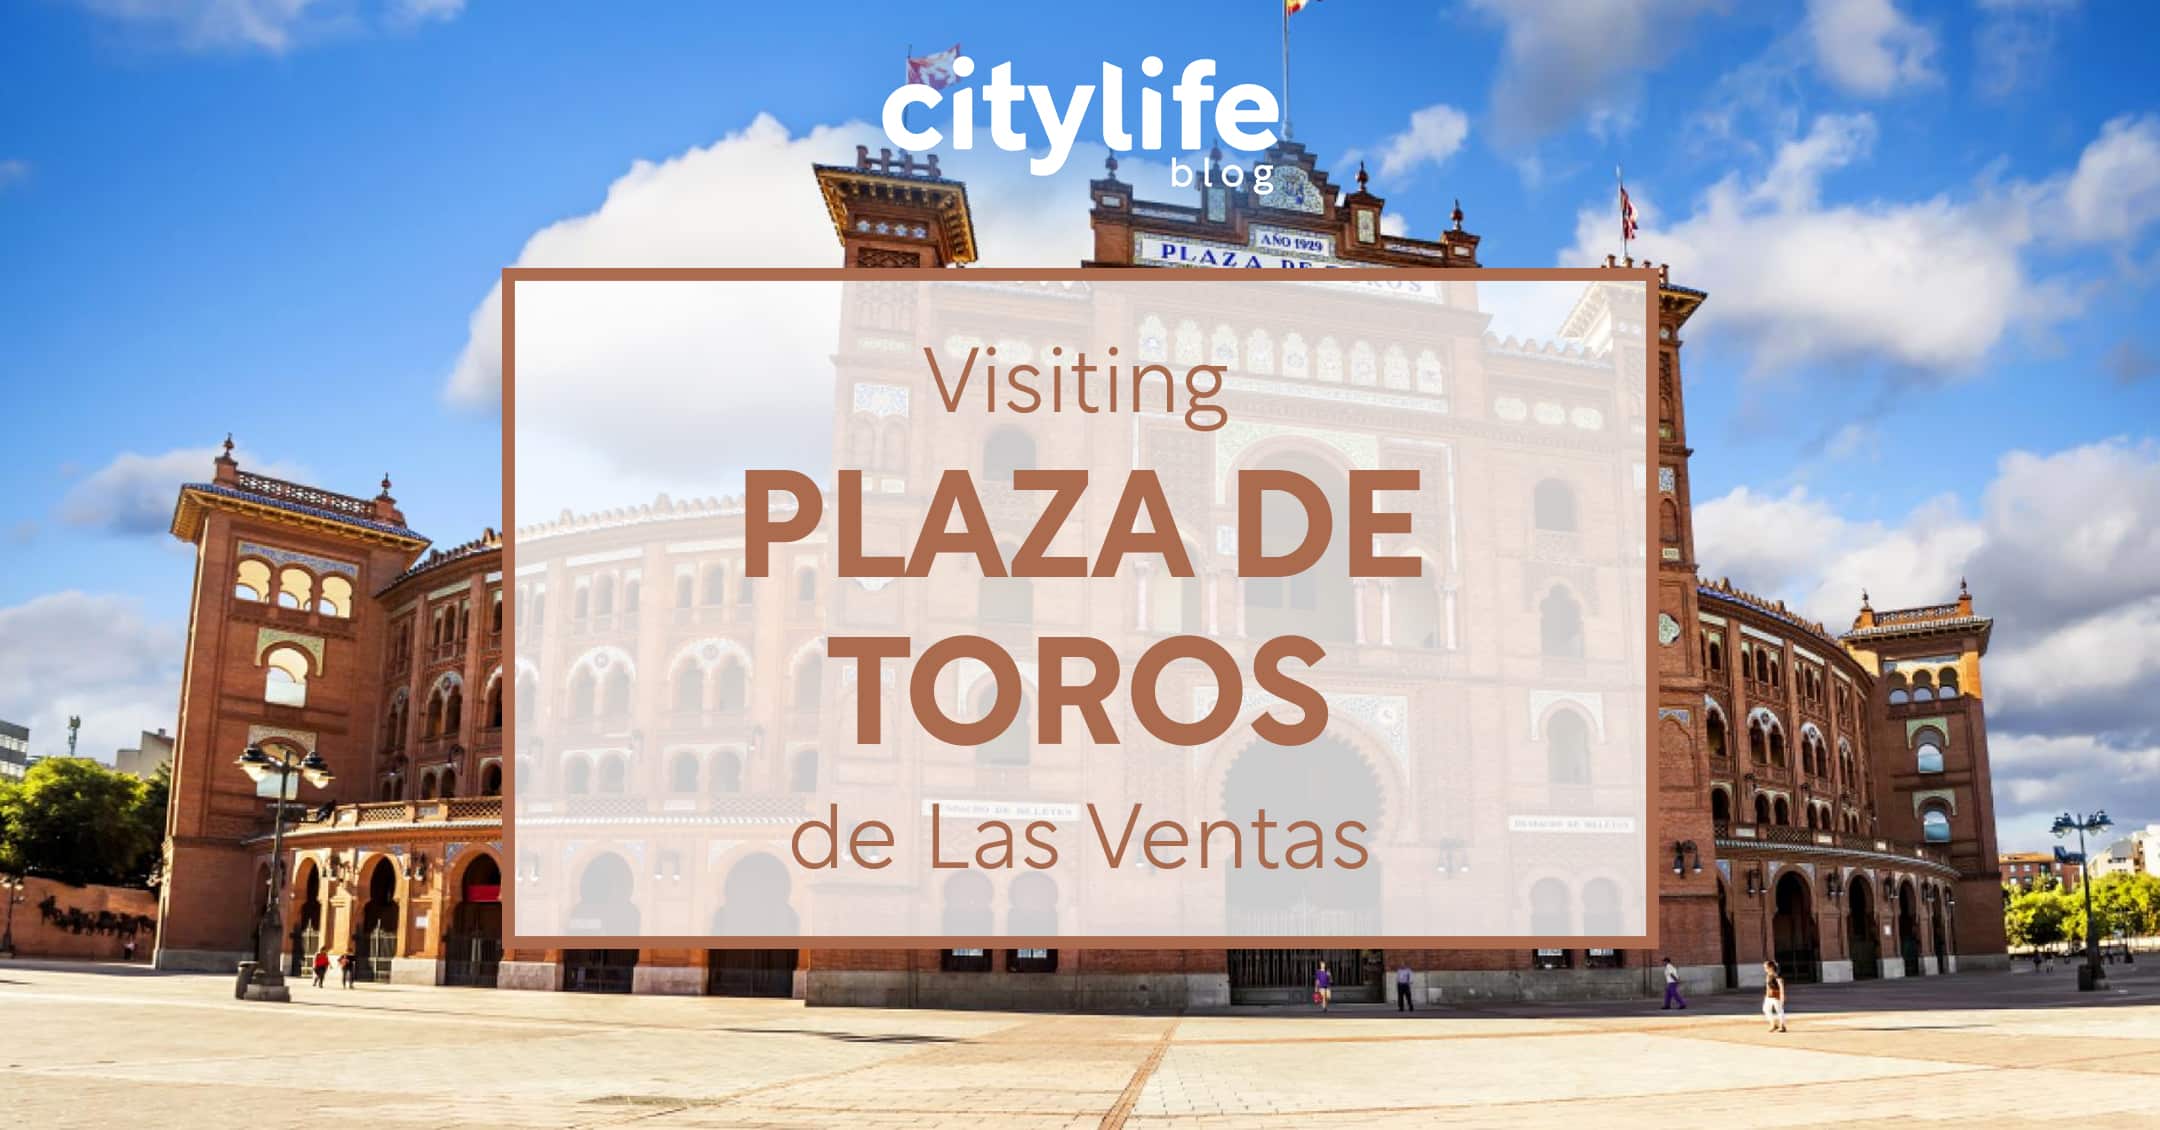 featured-image-plaza-de-toros-las-ventas-citylife-madrid